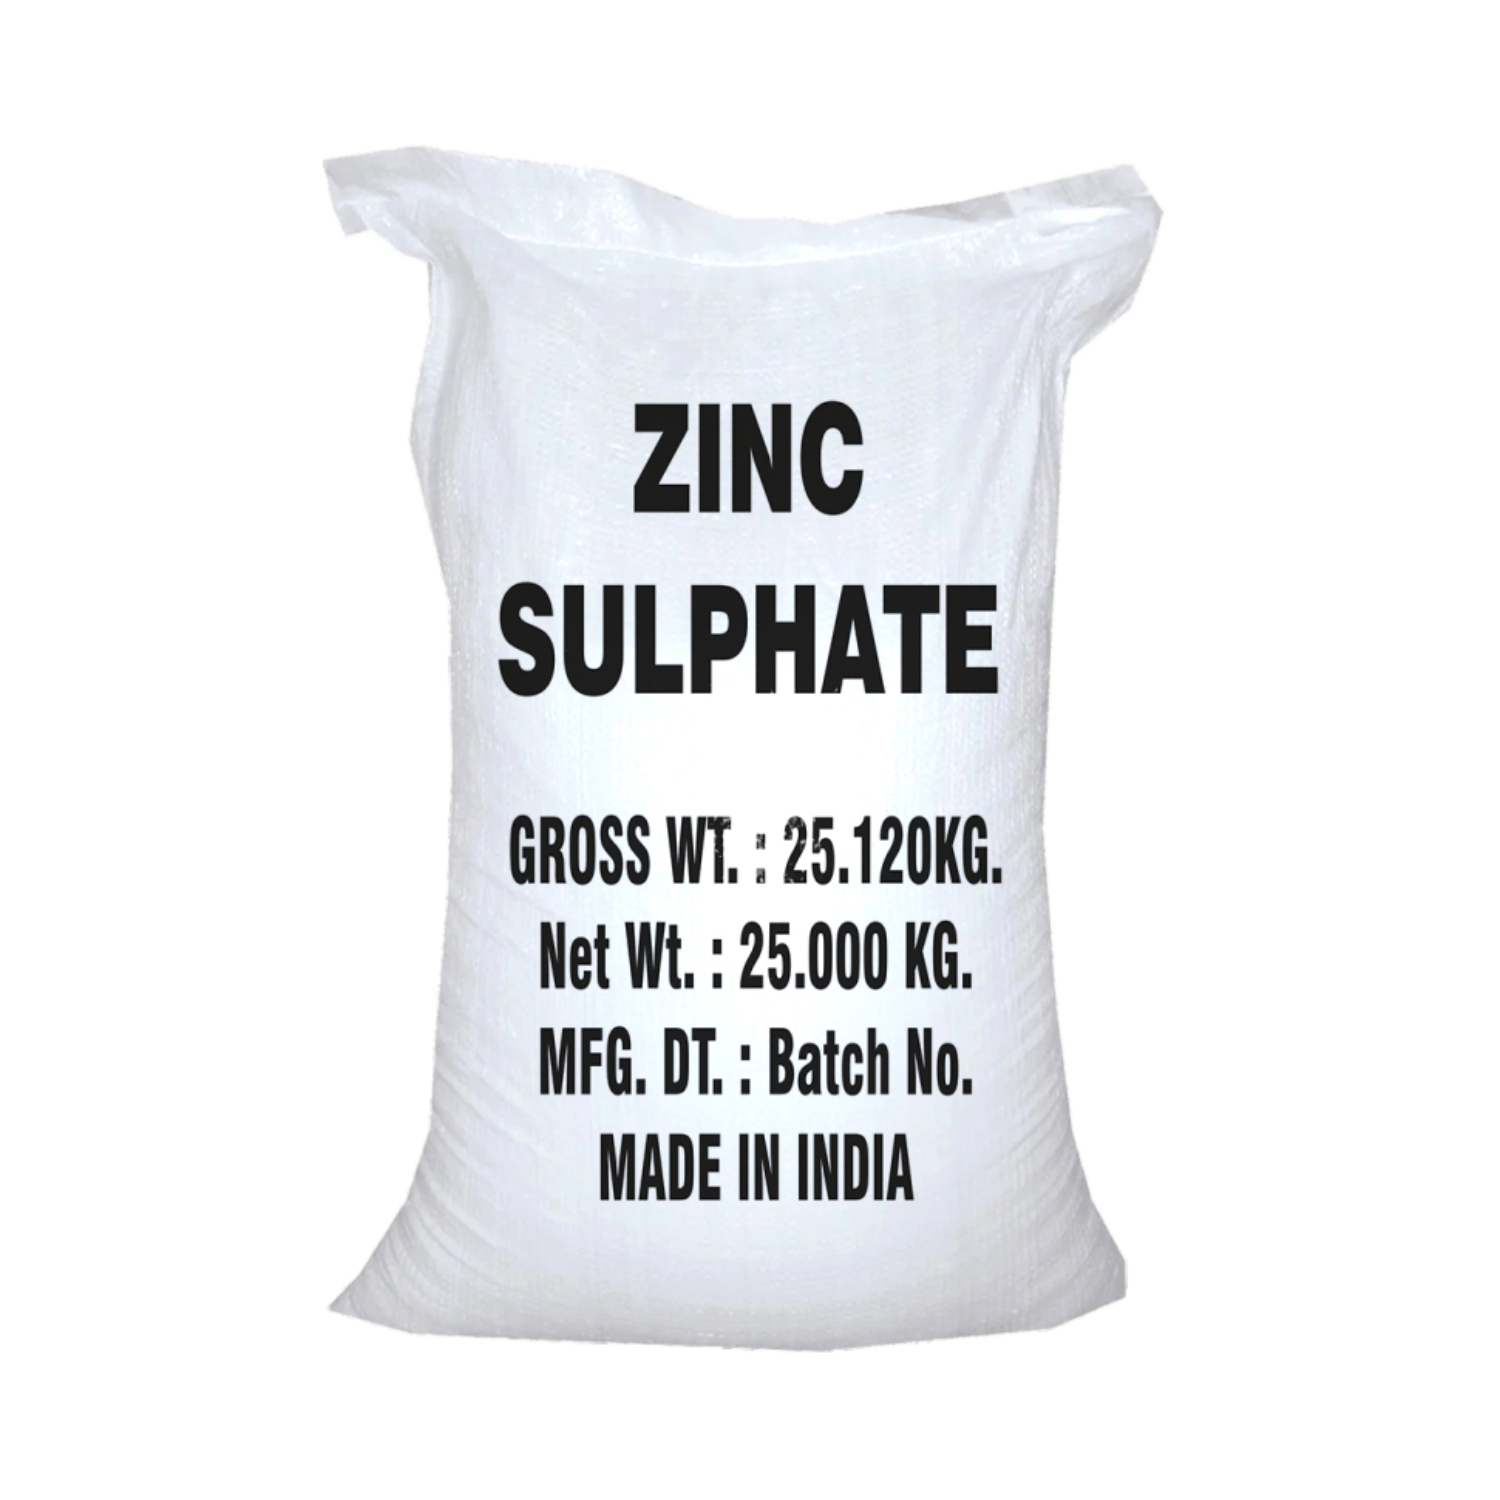 Zinc Sulphate white bag